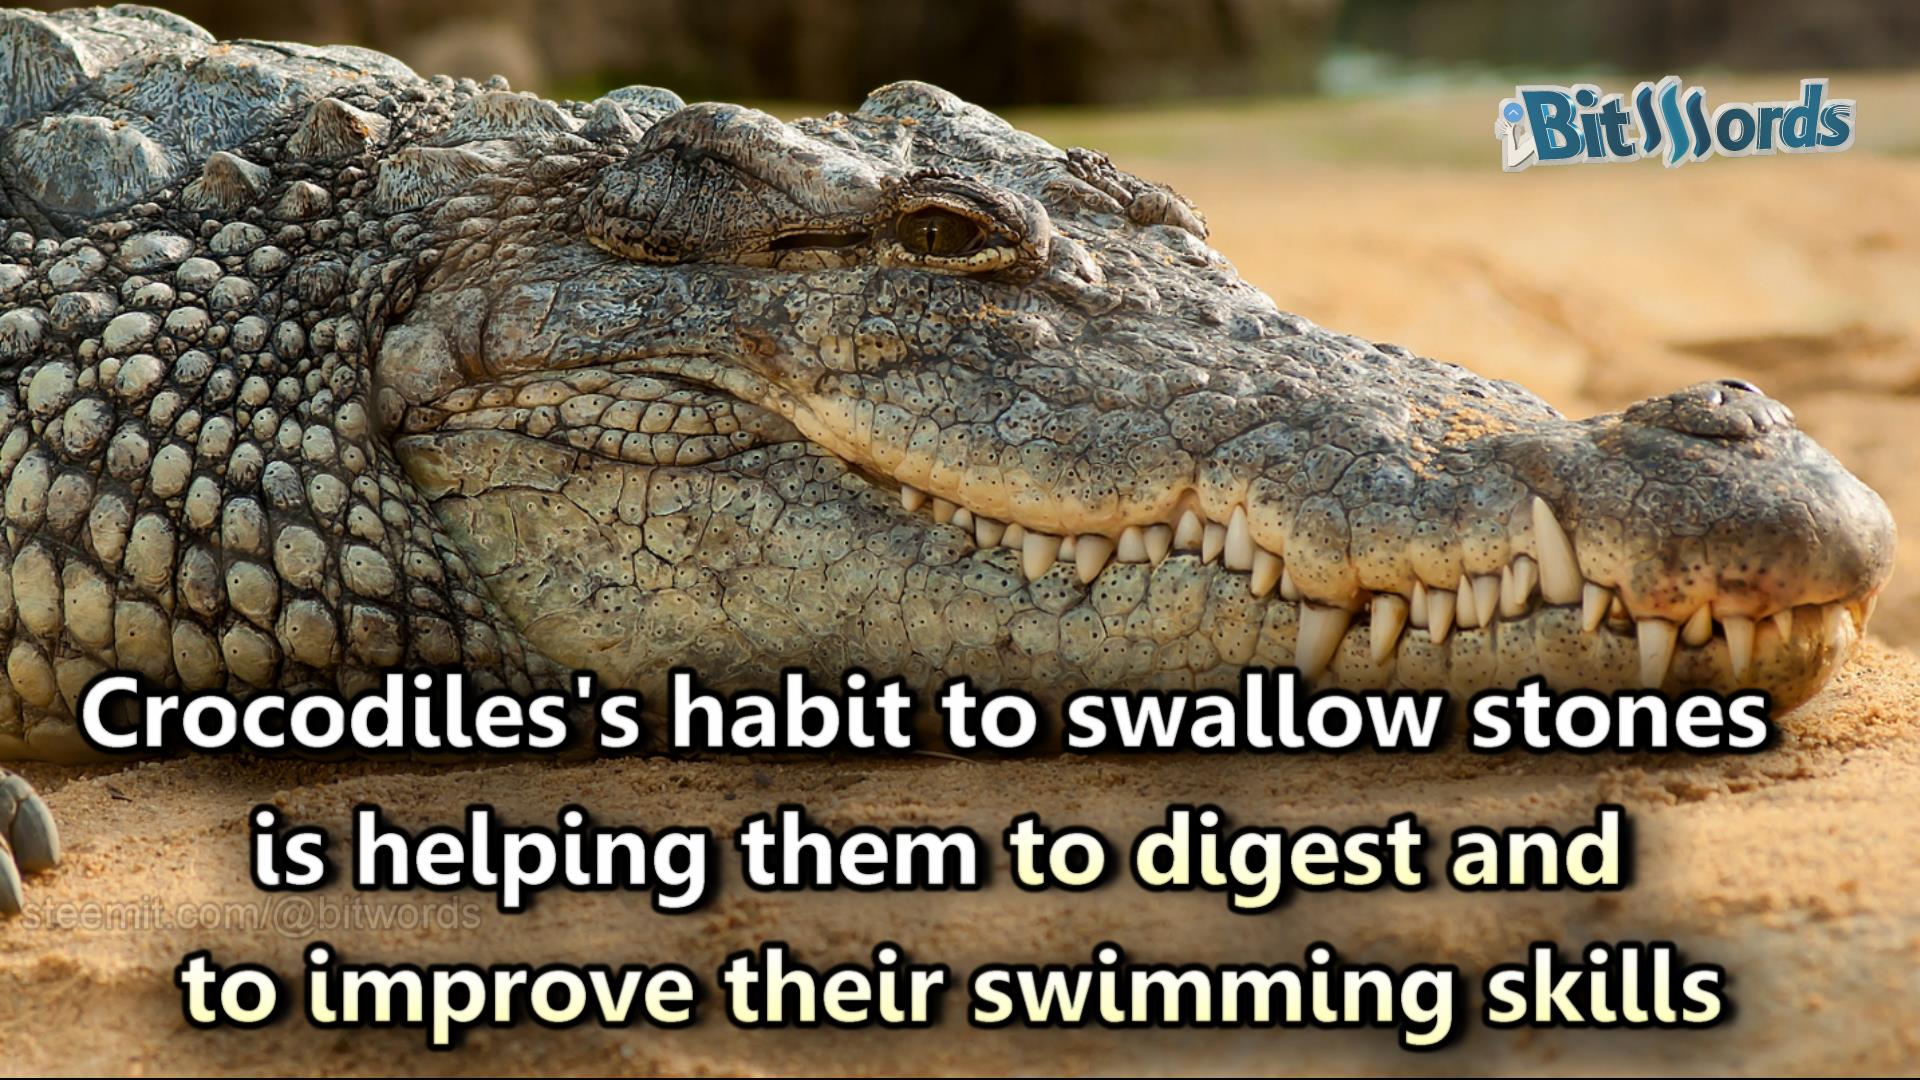 bitwords steemit did you know crocodiles swallow stones why.jpg